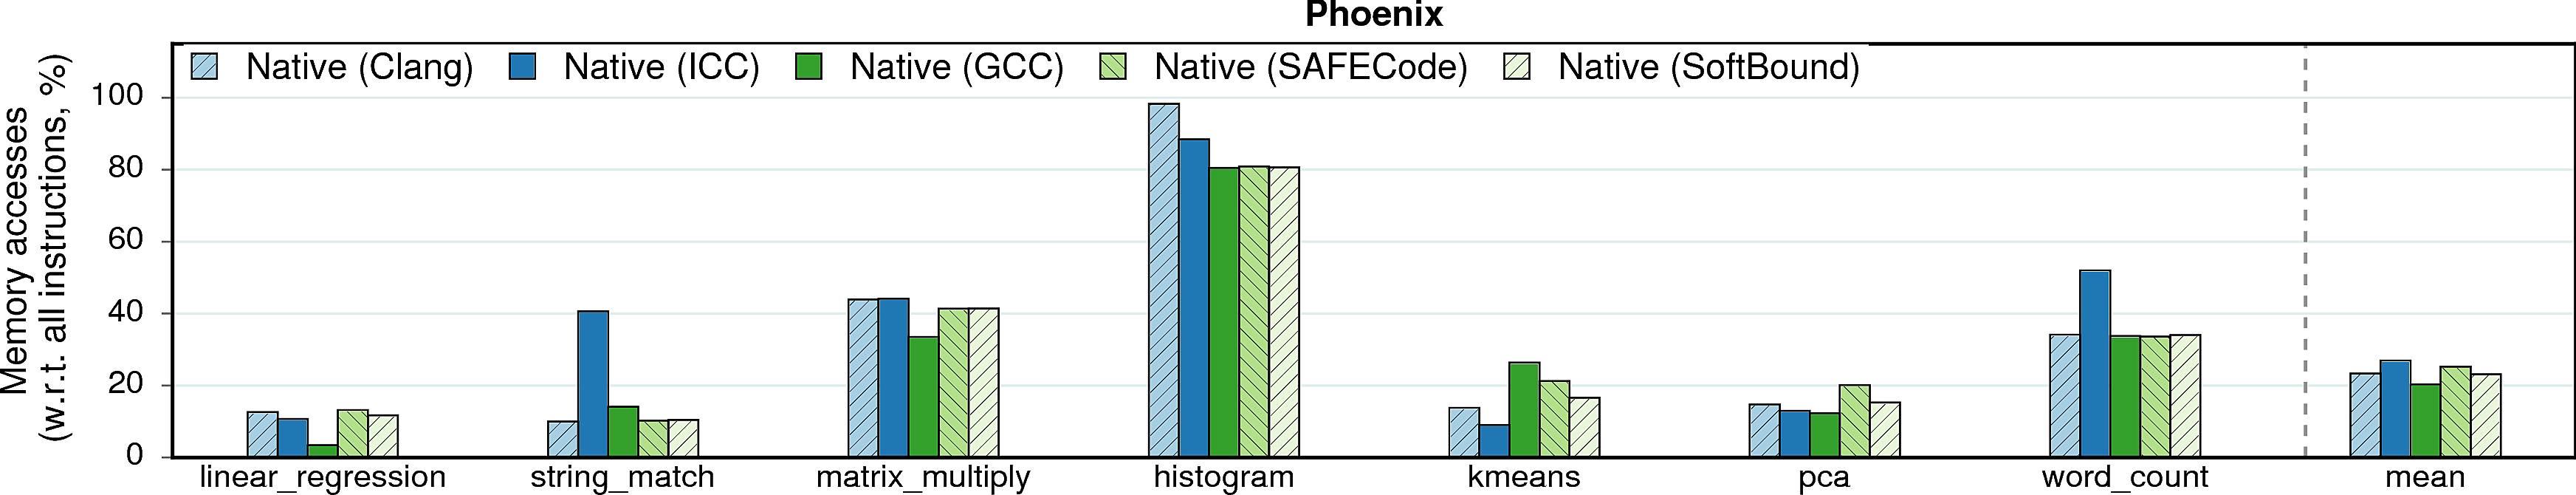 Native memory accesses of Phoenix